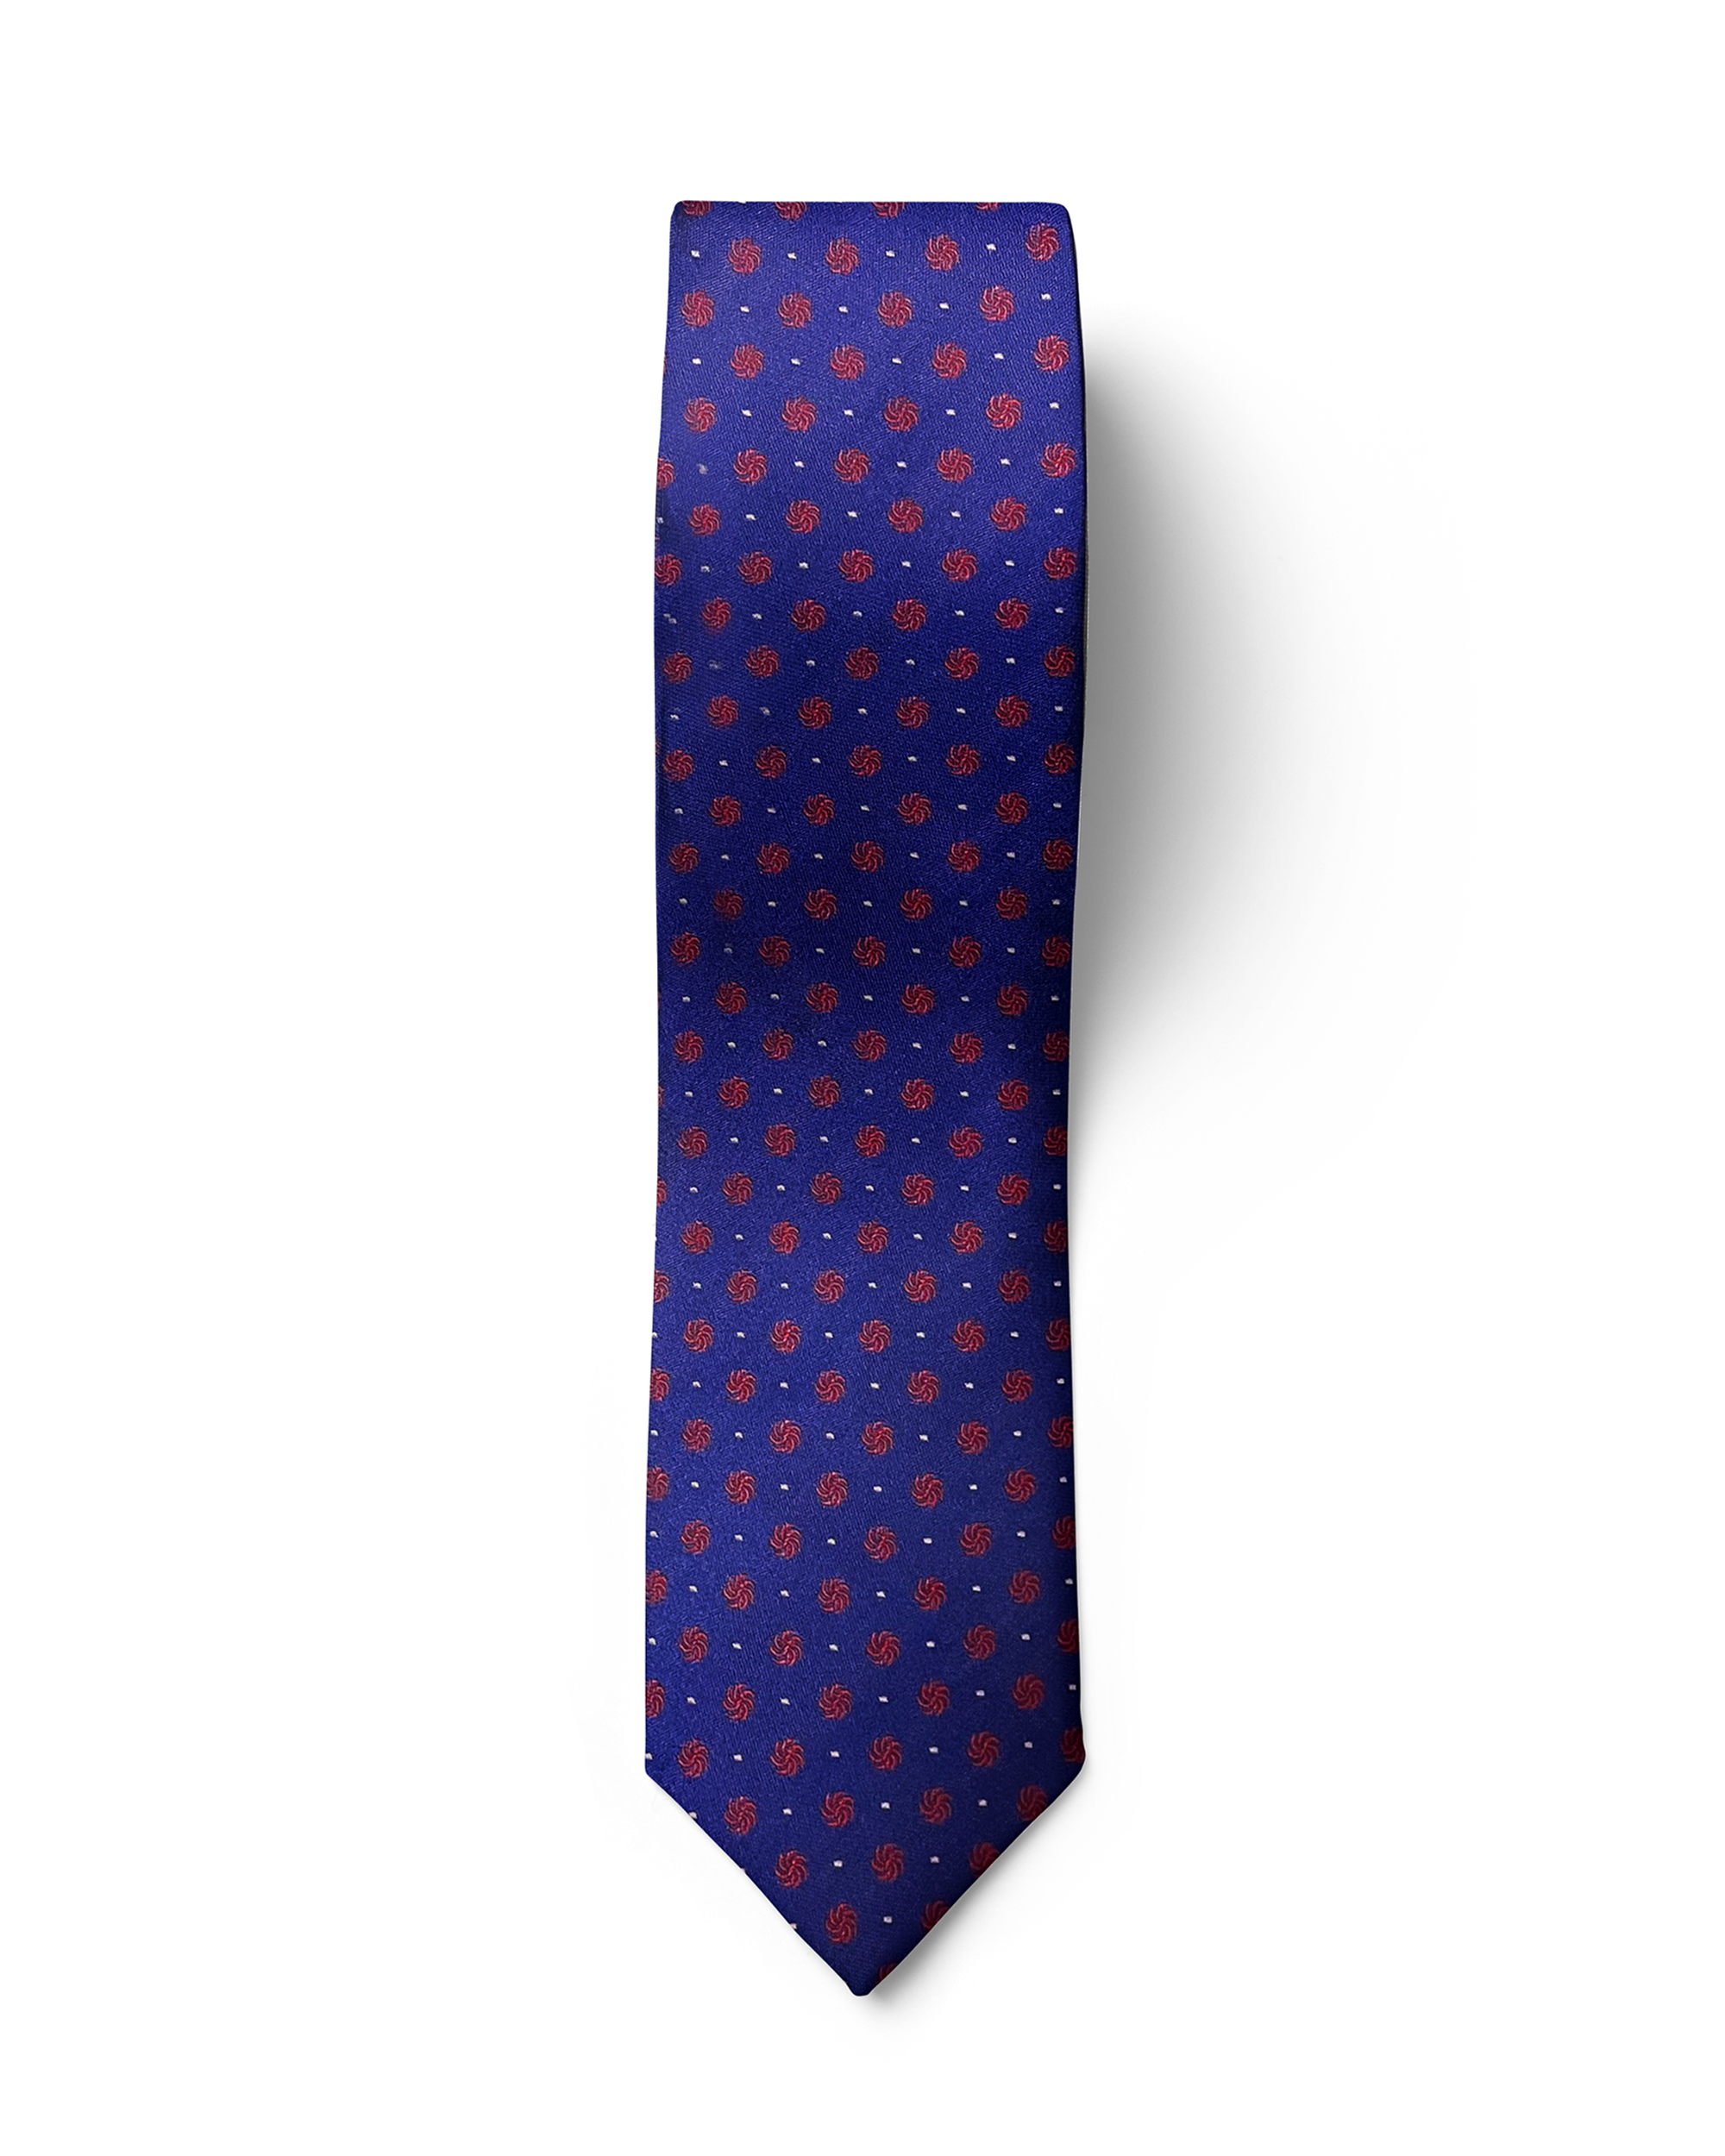 Borjgali Silk Tie (Navy Blue)